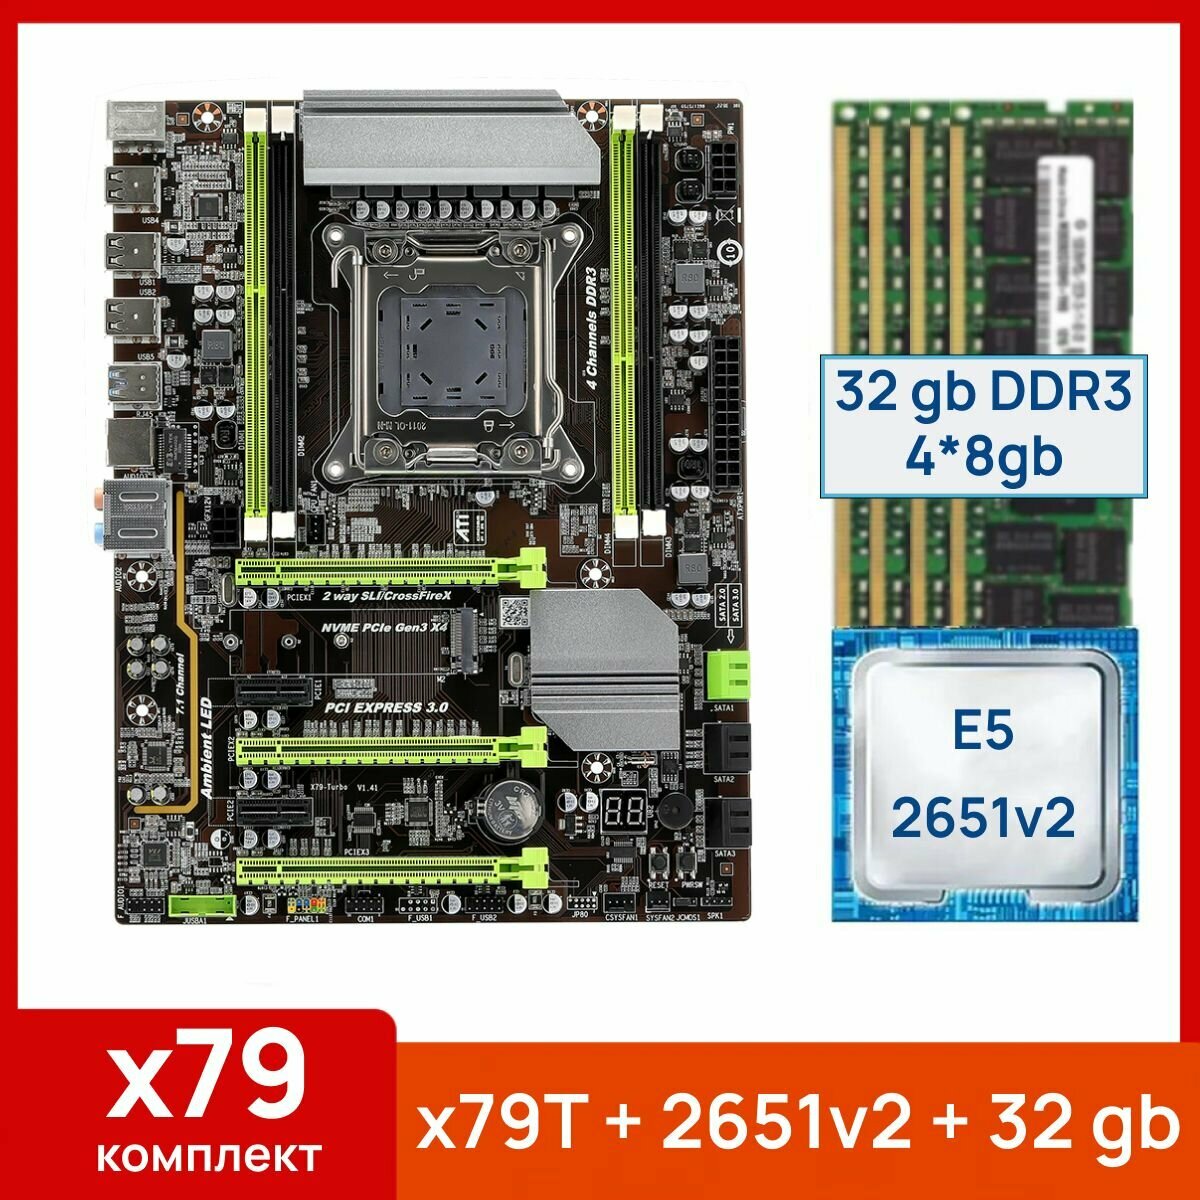 Комплект: Atermiter x79-Turbo + Xeon E5 2651v2 + 32 gb(4x8gb) DDR3 ecc reg